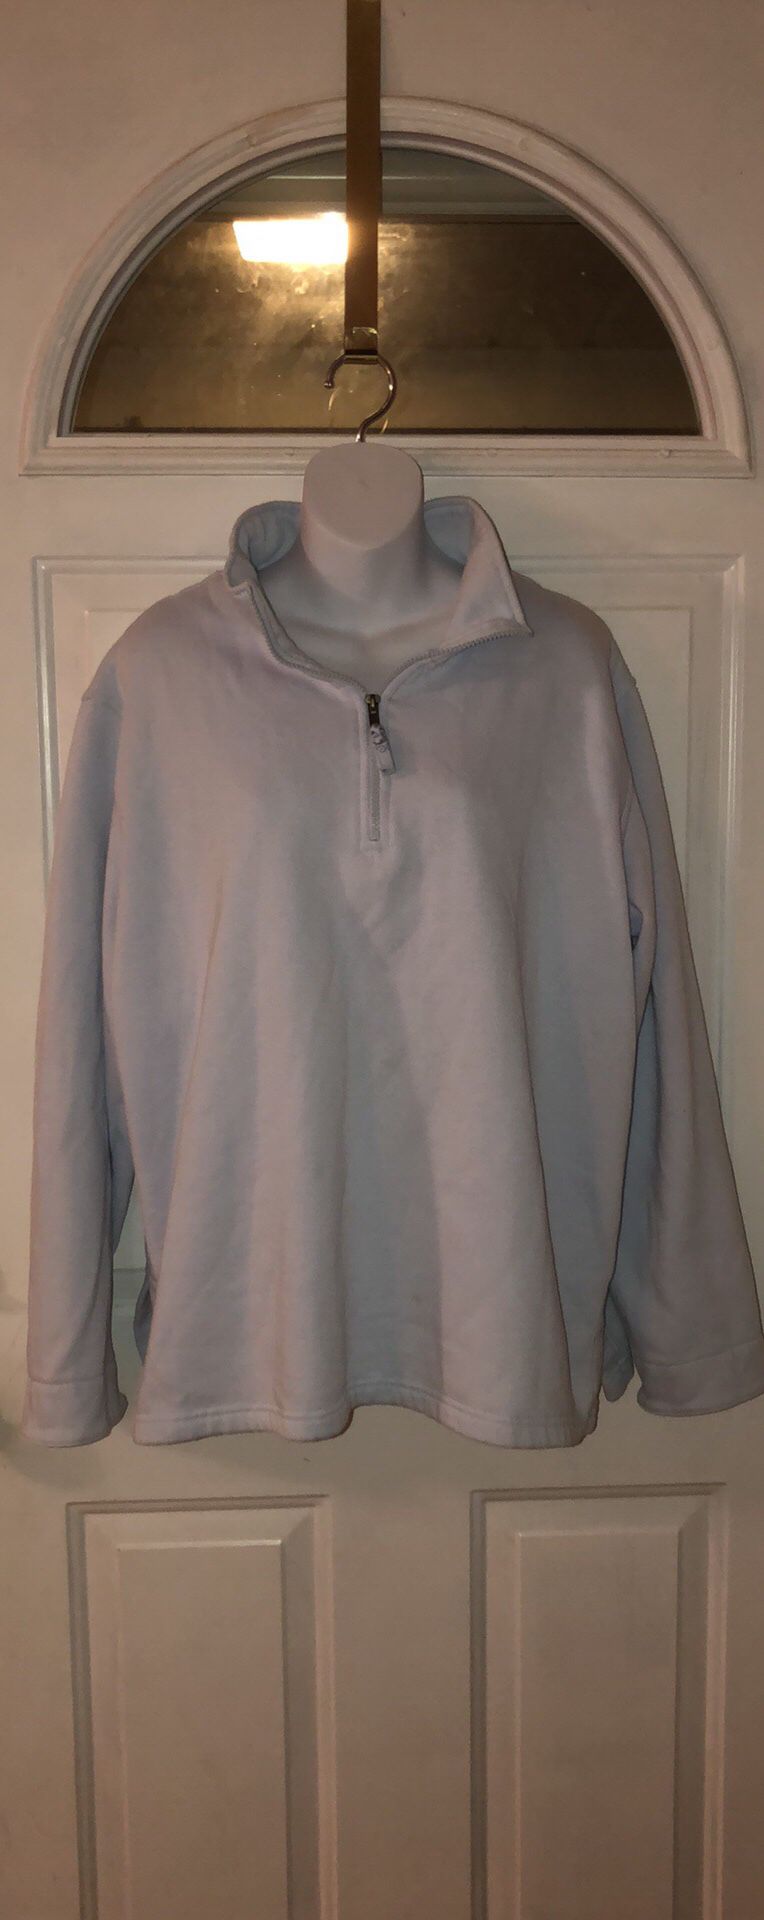 Size 2x light blue sweatshirt with a zip top